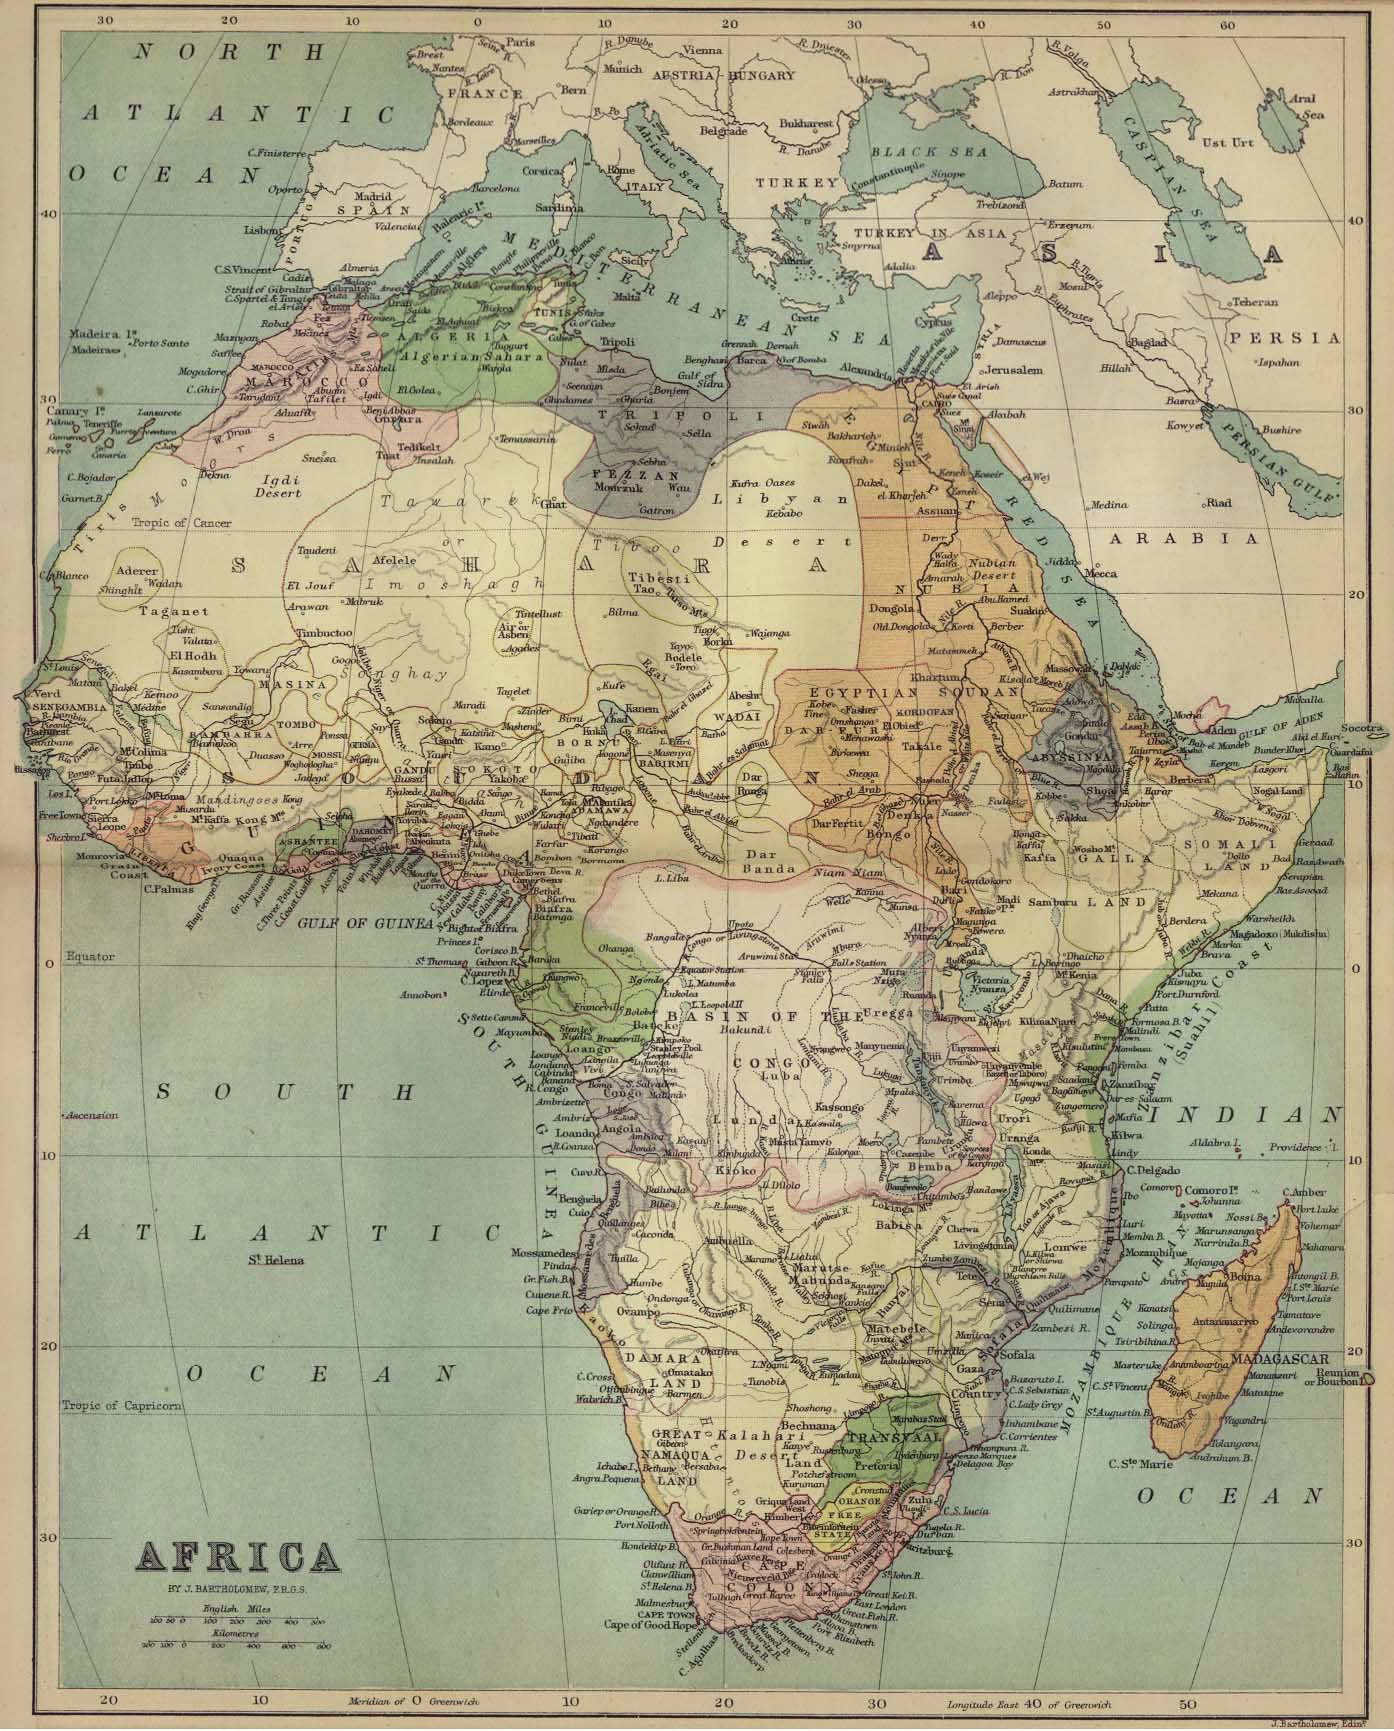 Africa1885.jpg